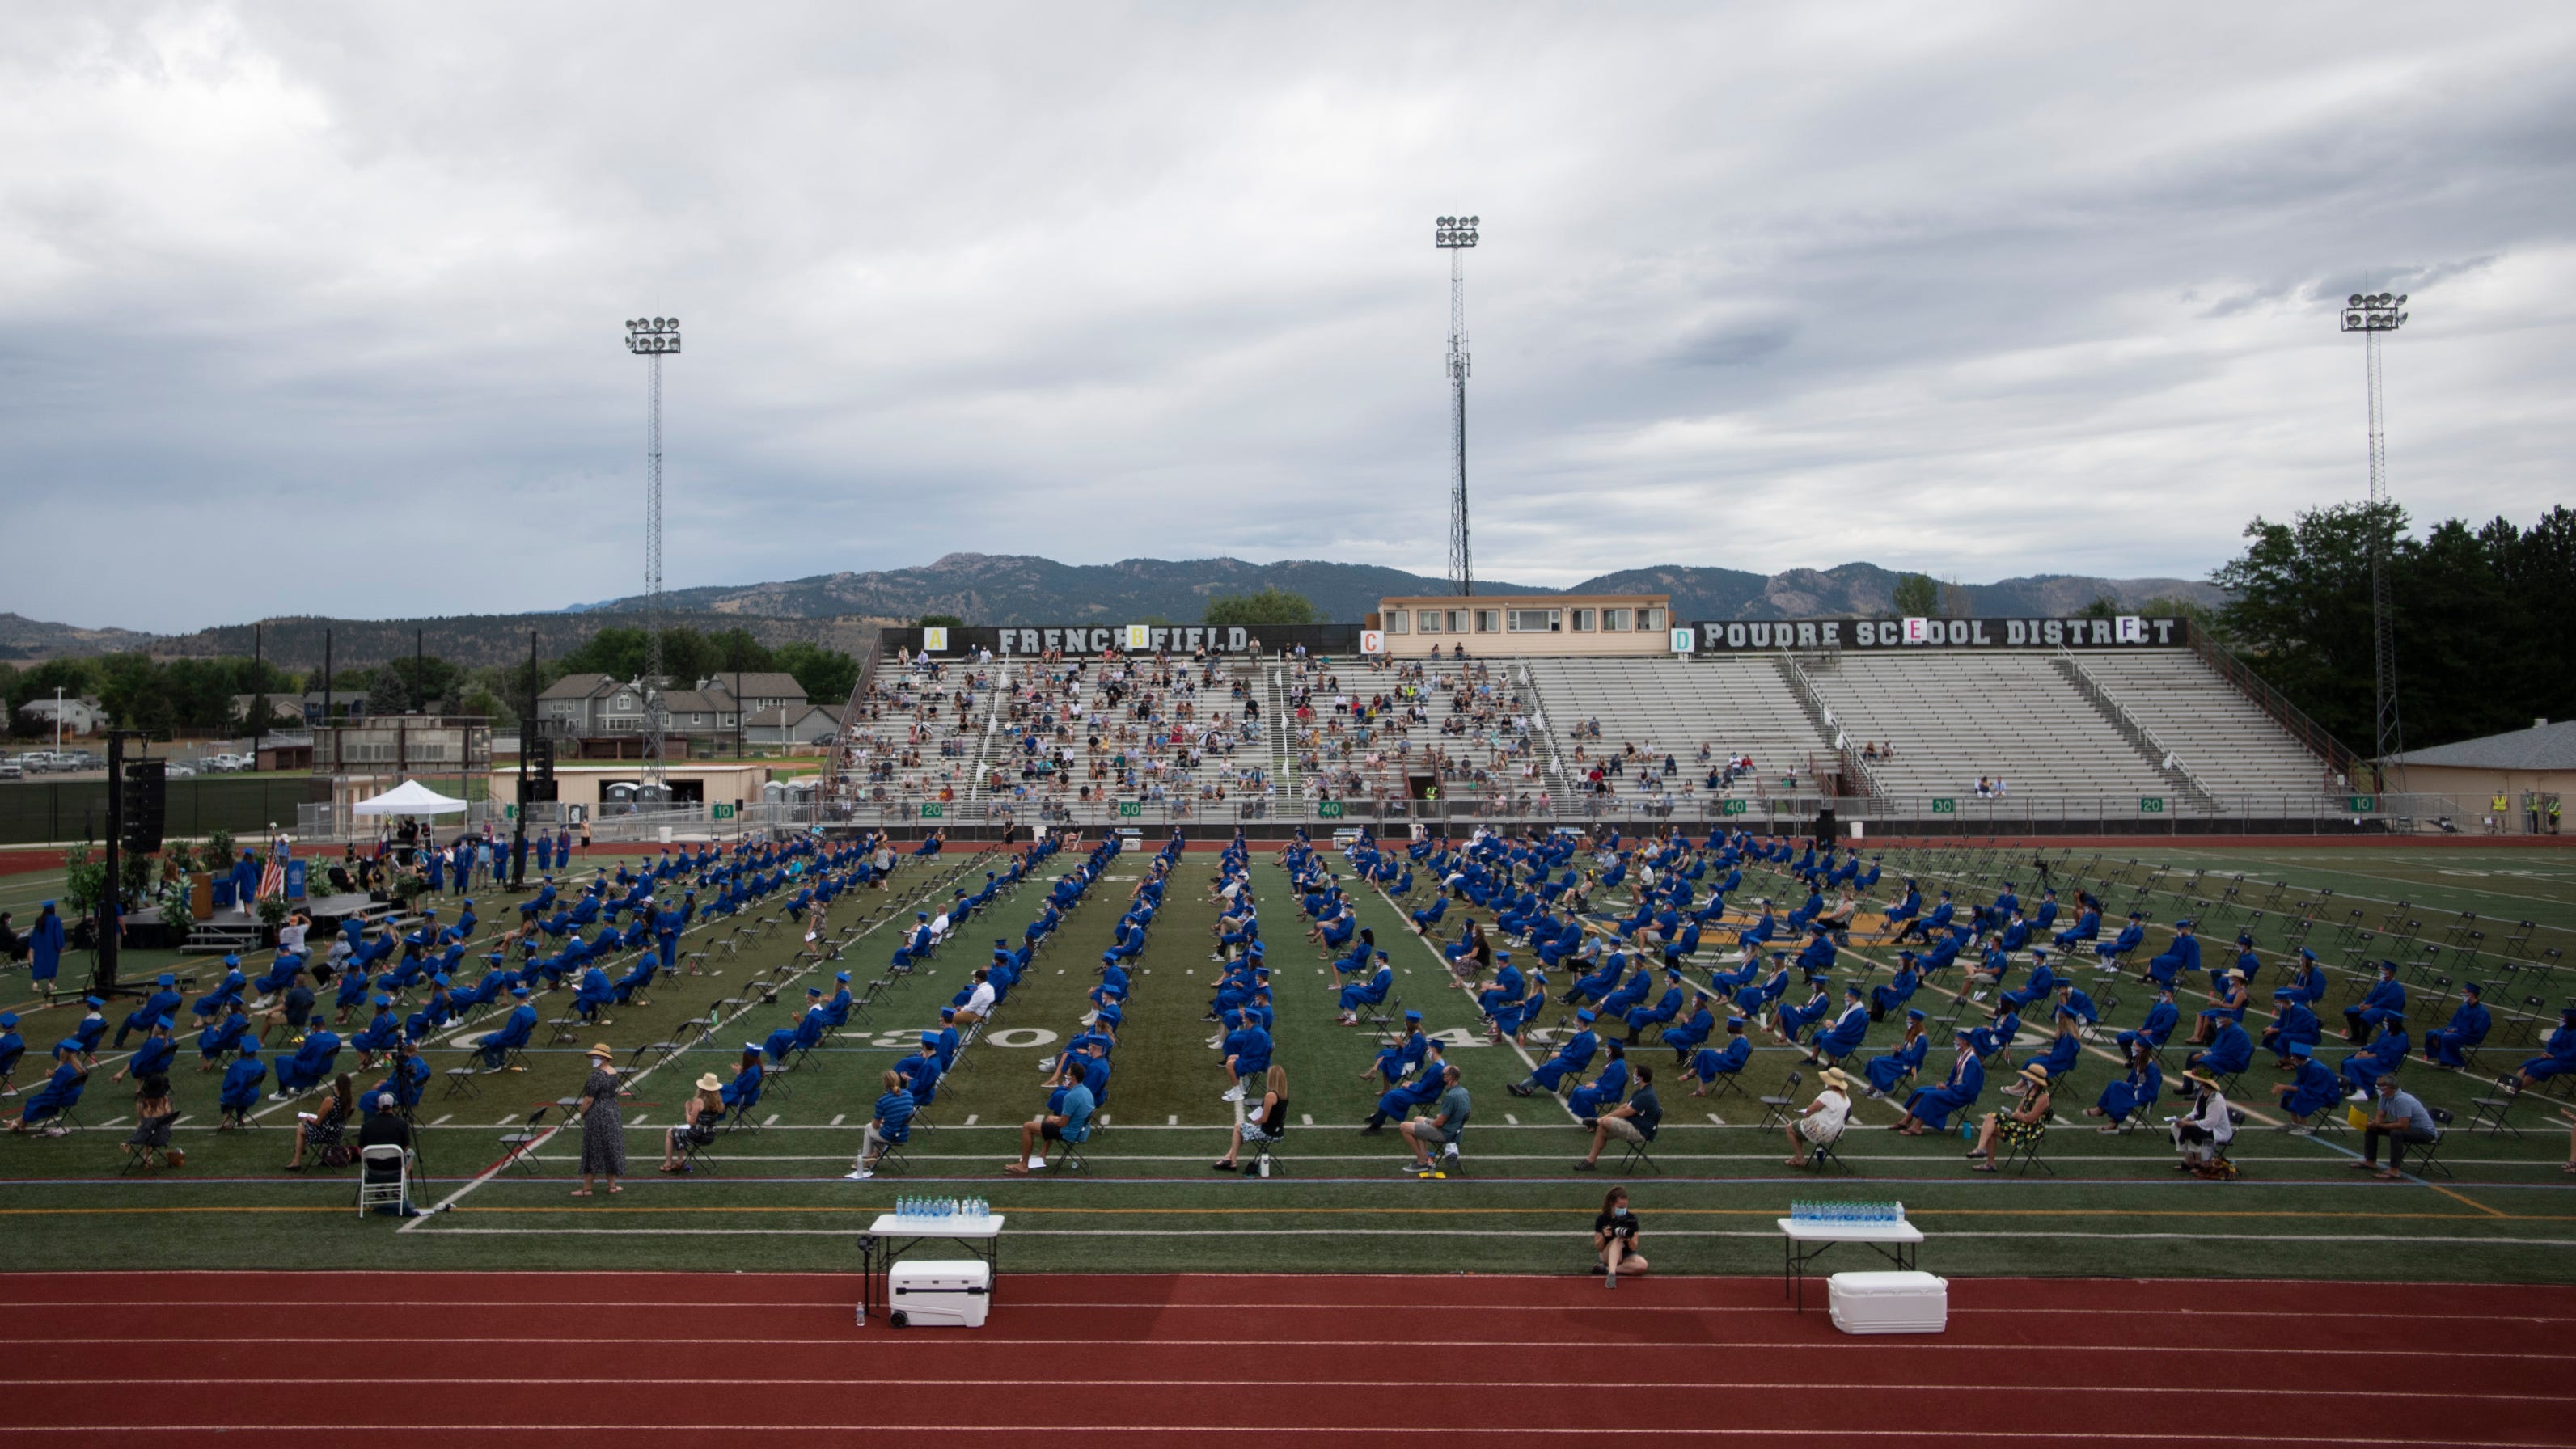 Poudre School District grants some flexibility in graduation requirements